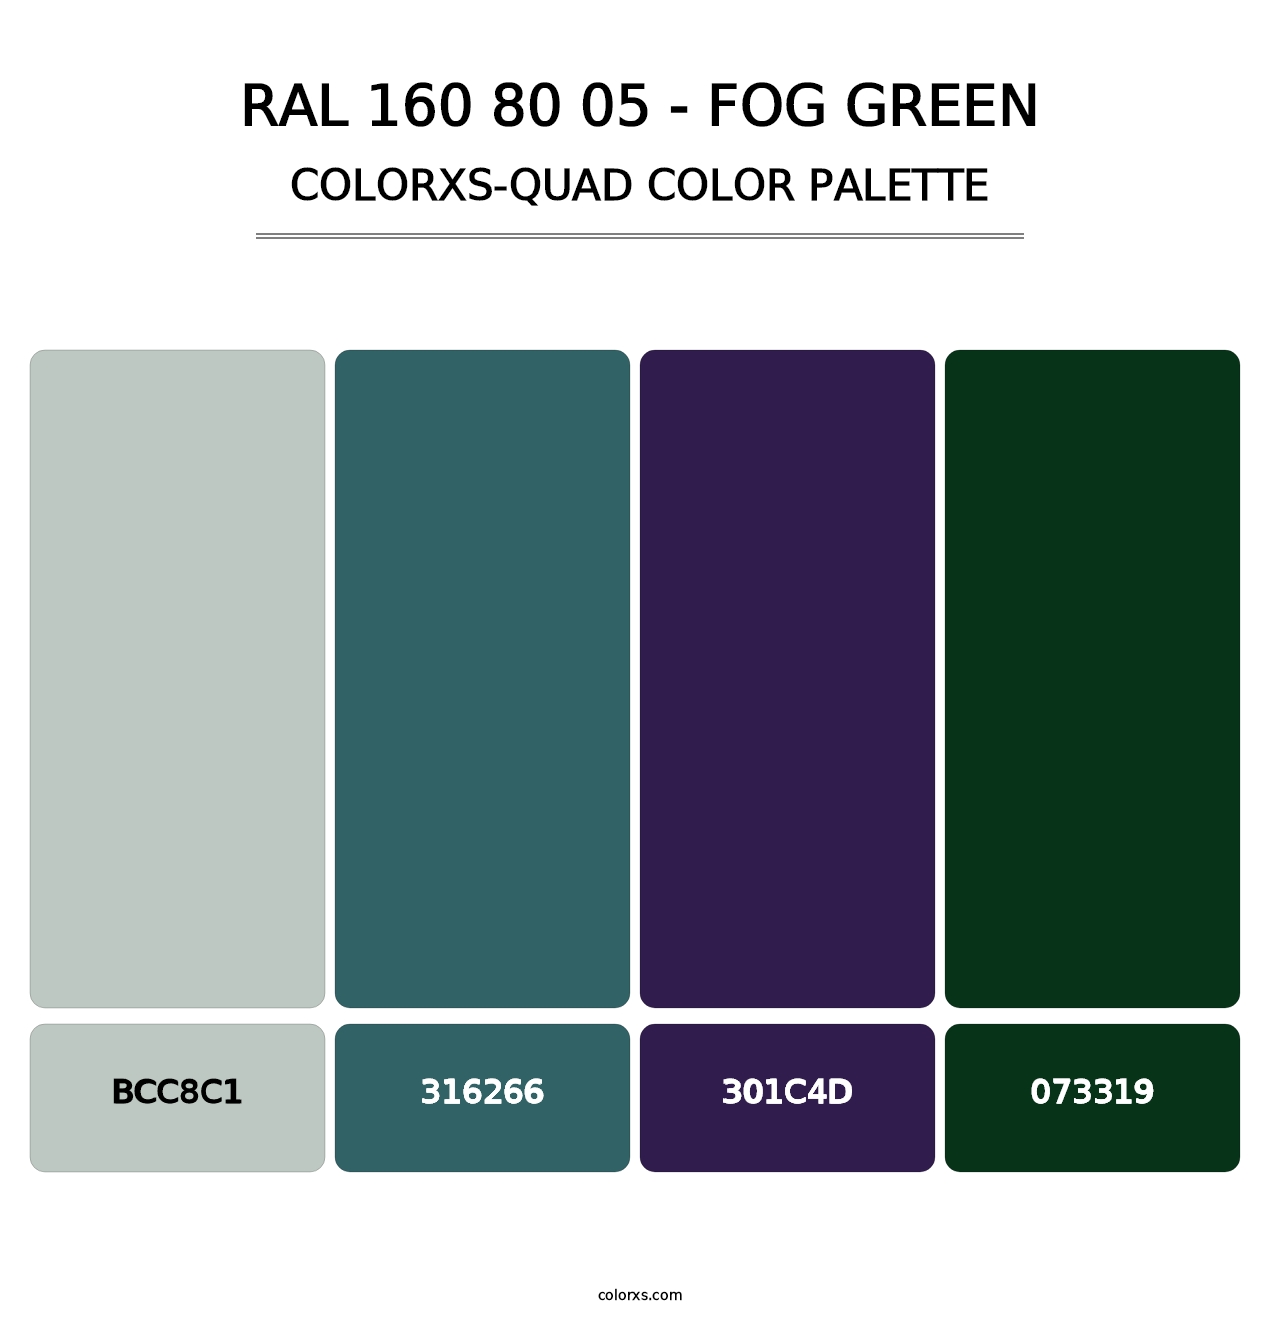 RAL 160 80 05 - Fog Green - Colorxs Quad Palette